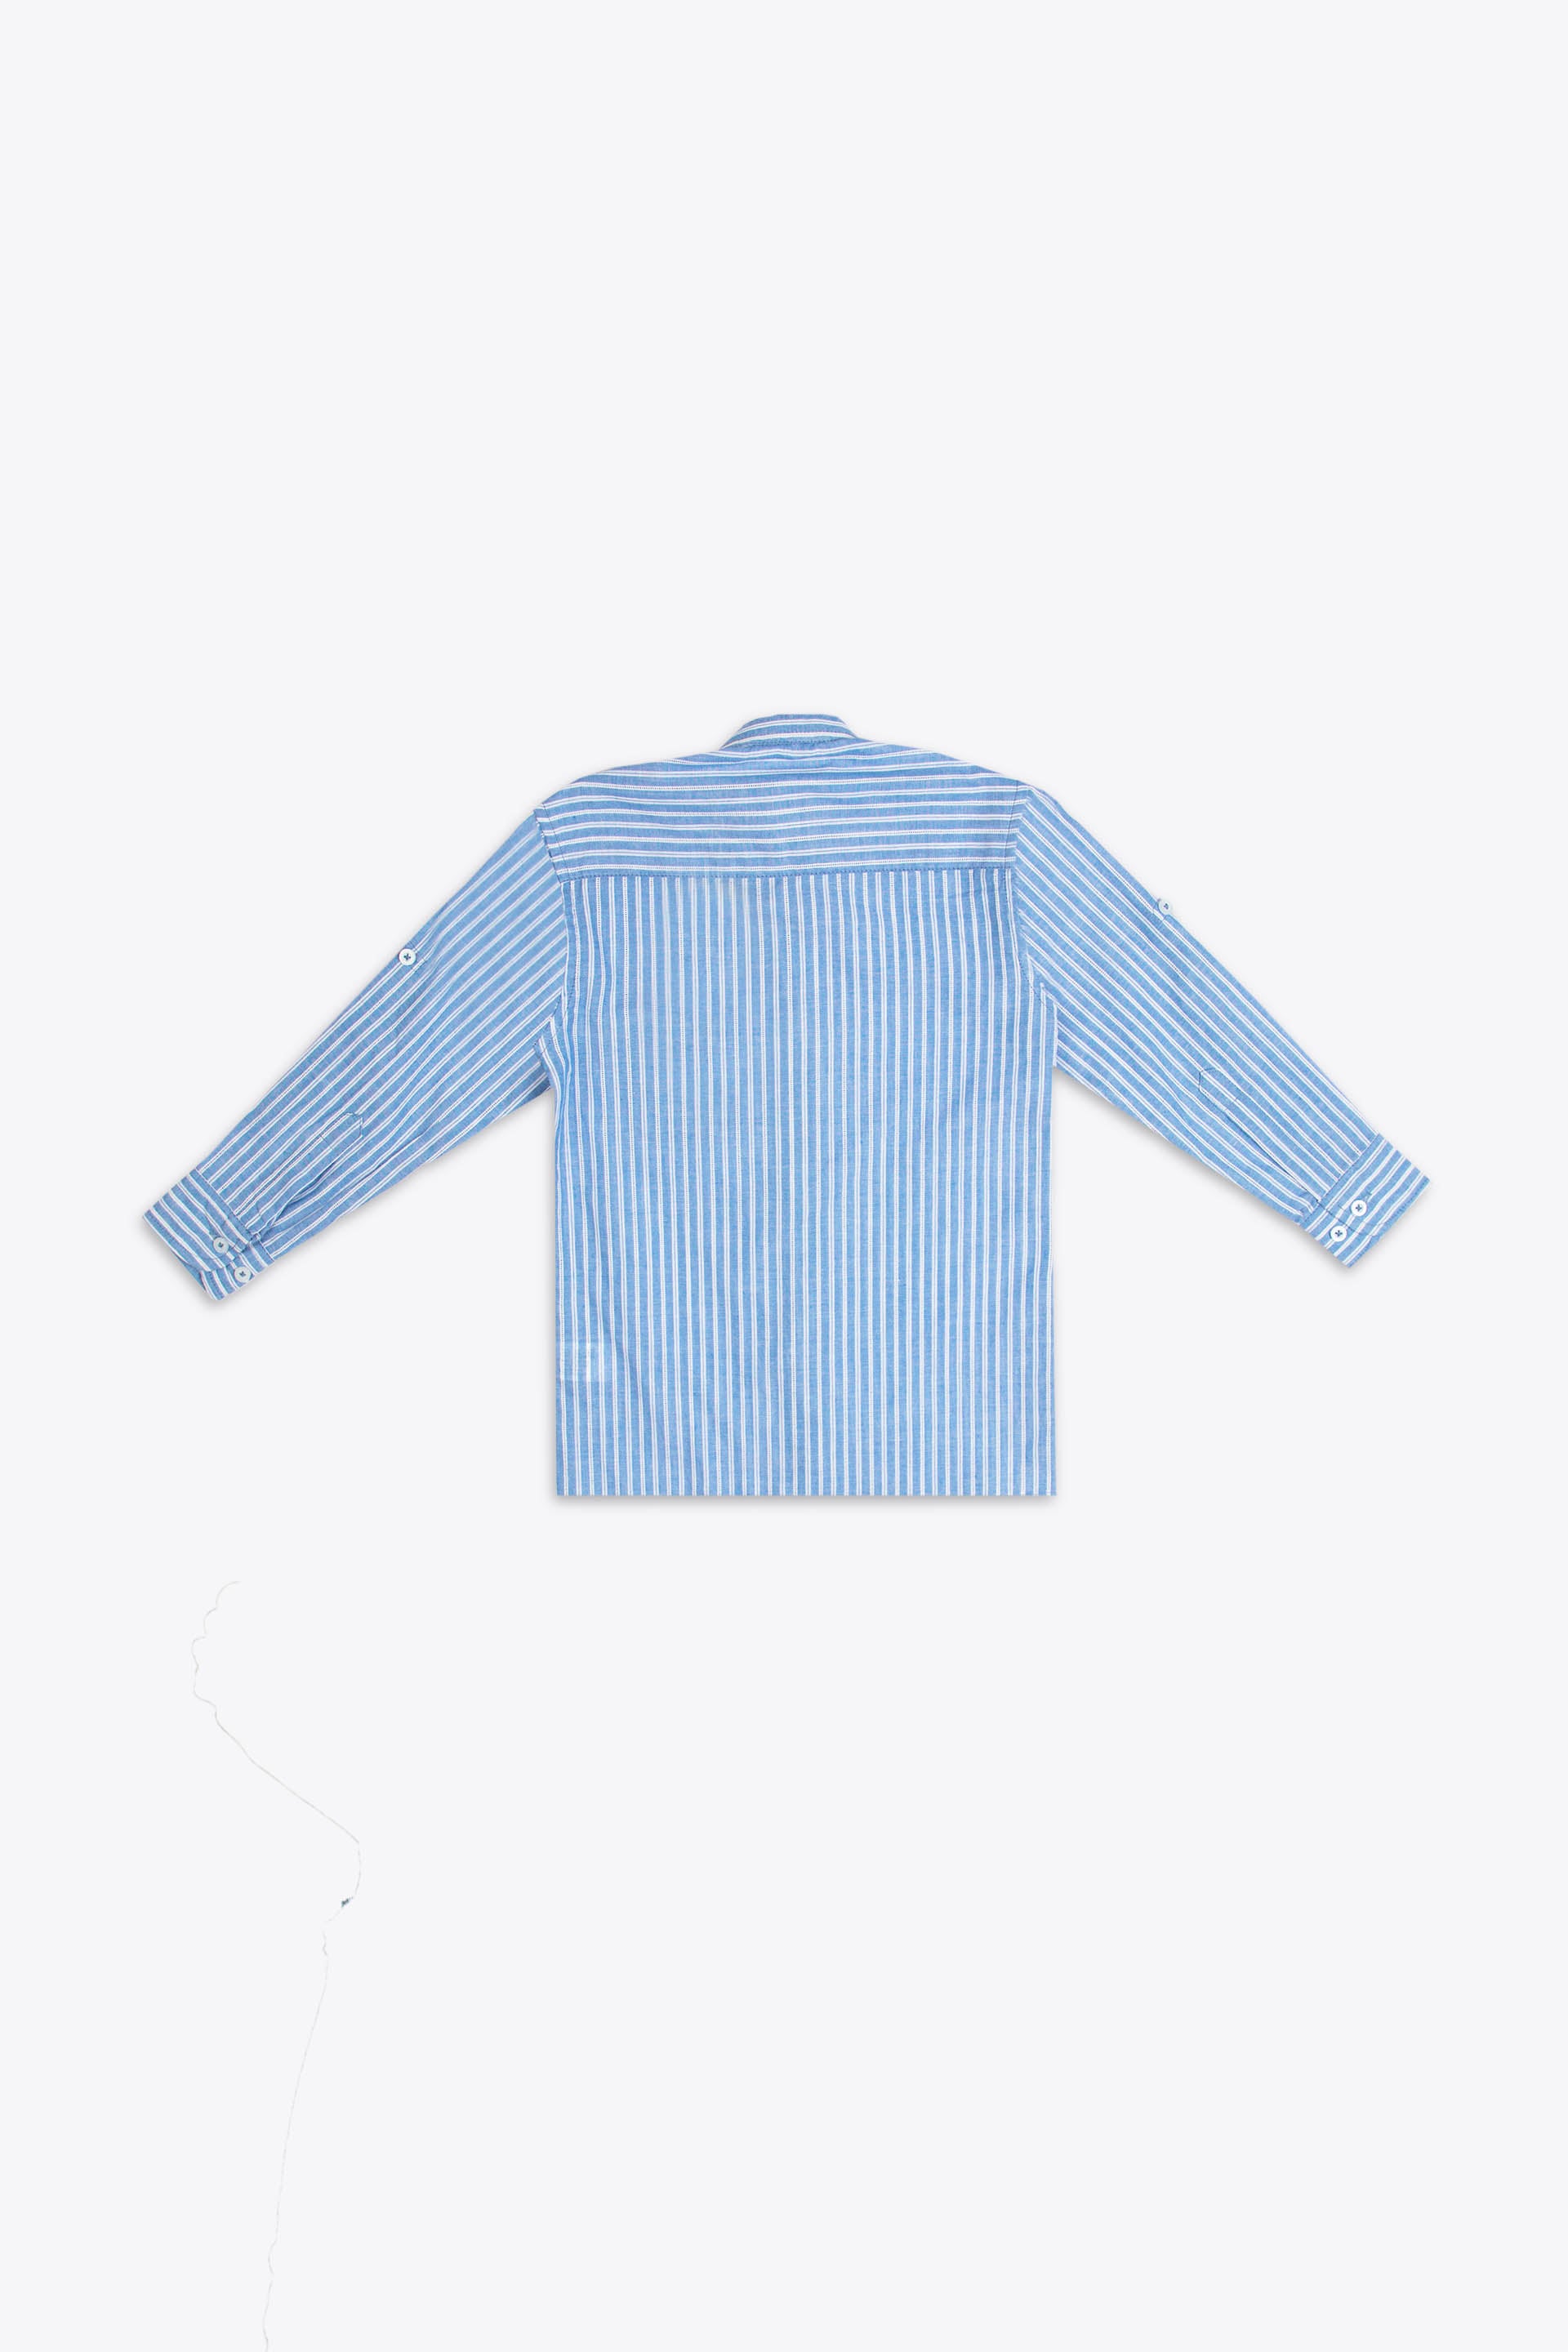 Stripe Shirt Blue